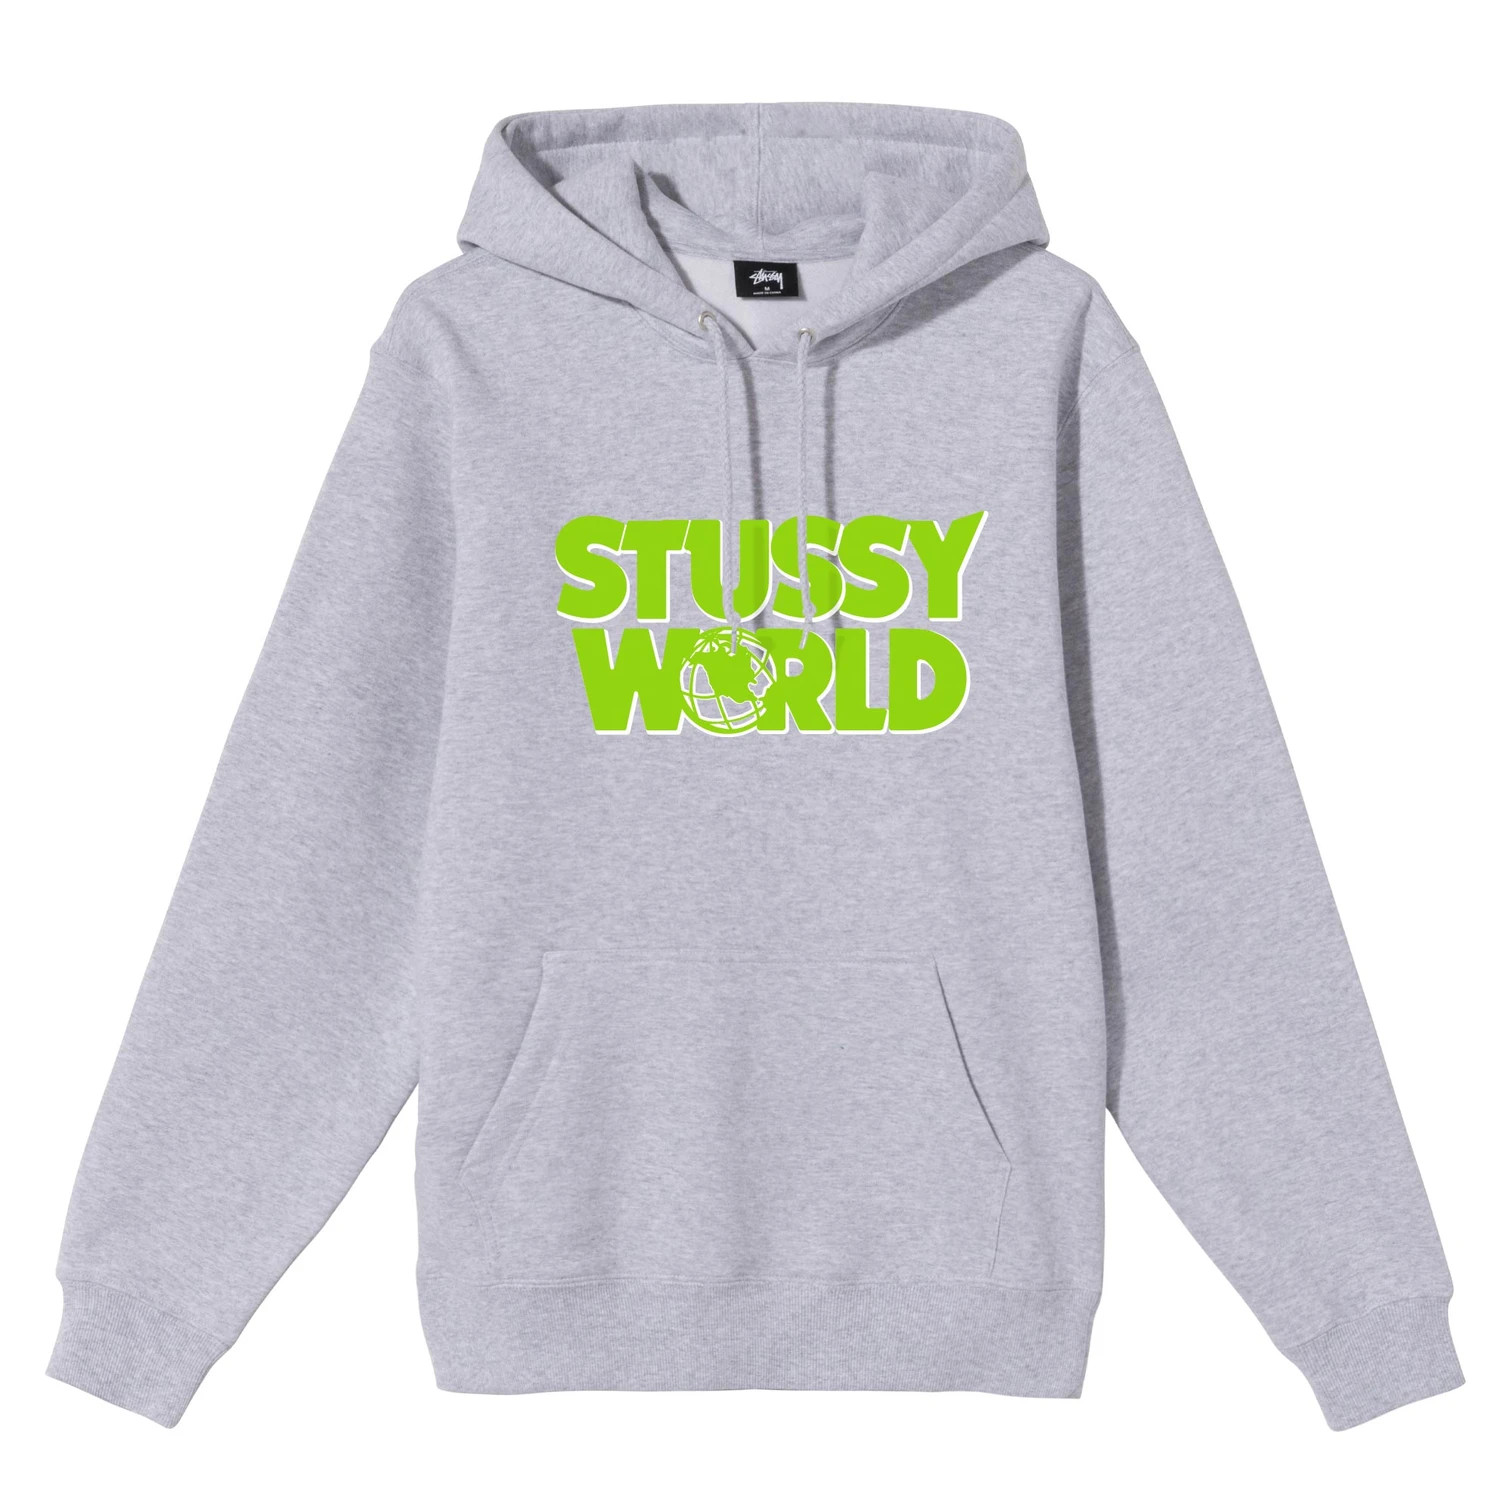 Stussy World Hood grey